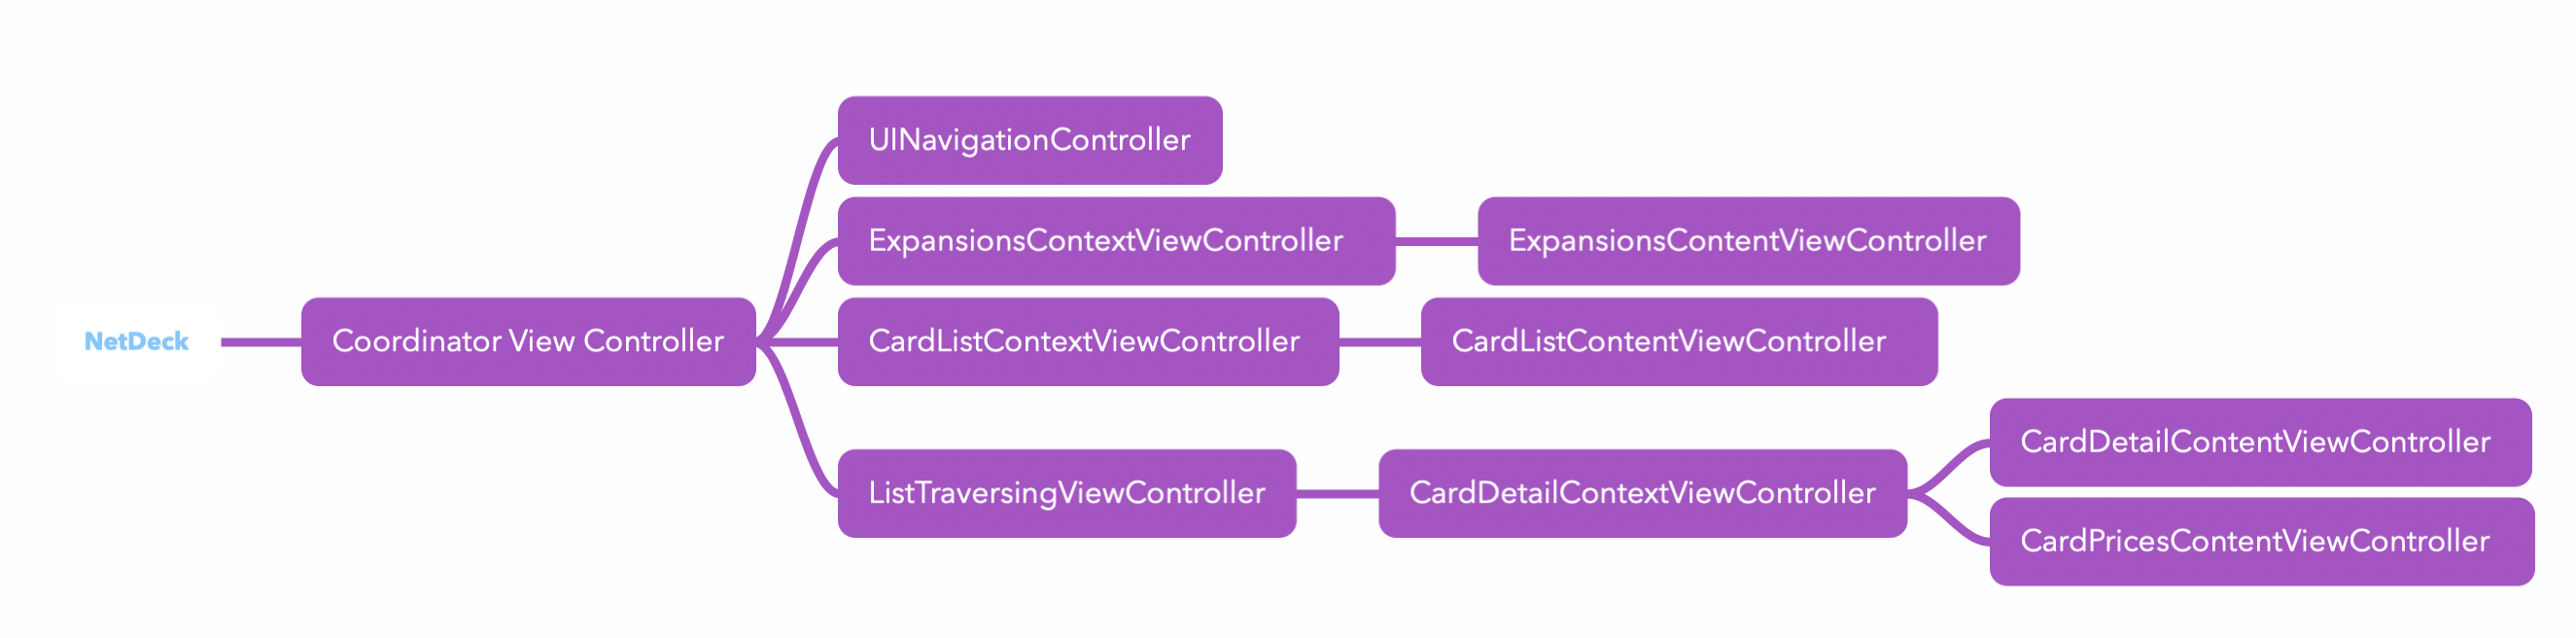 NetDeck View Controller Hierarchy